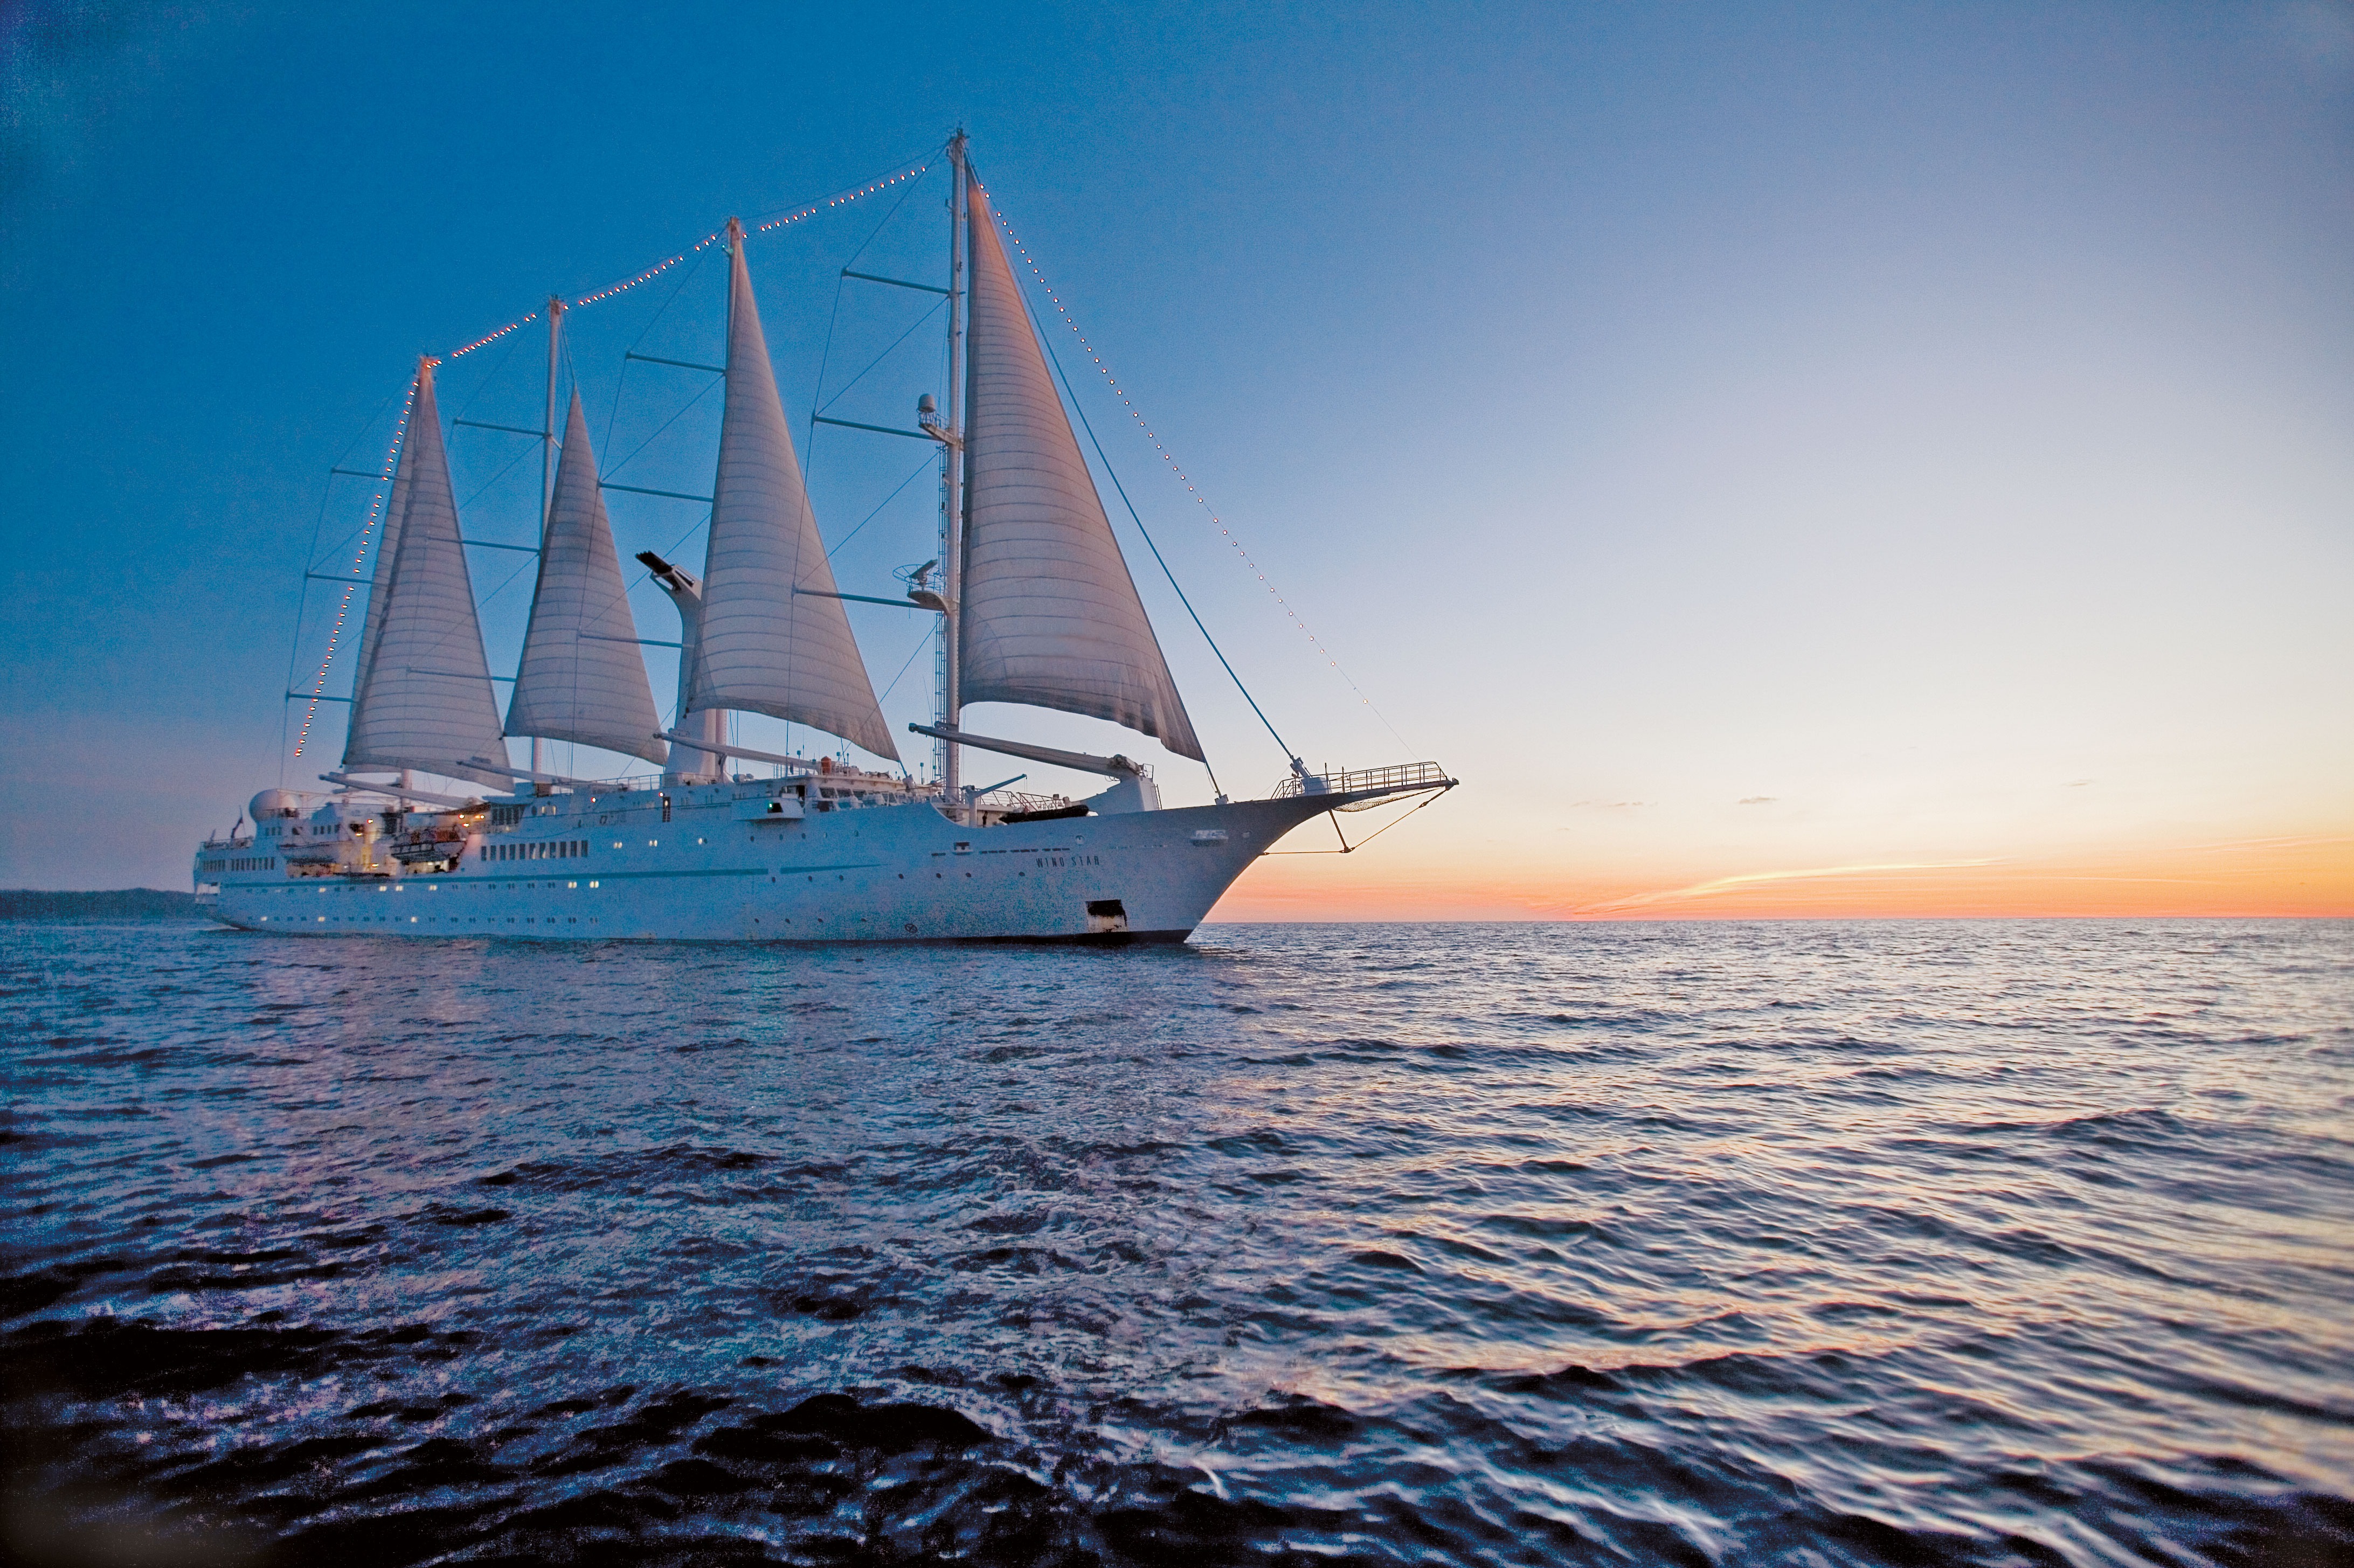 Windstar Cruises - Wind Star at sunset